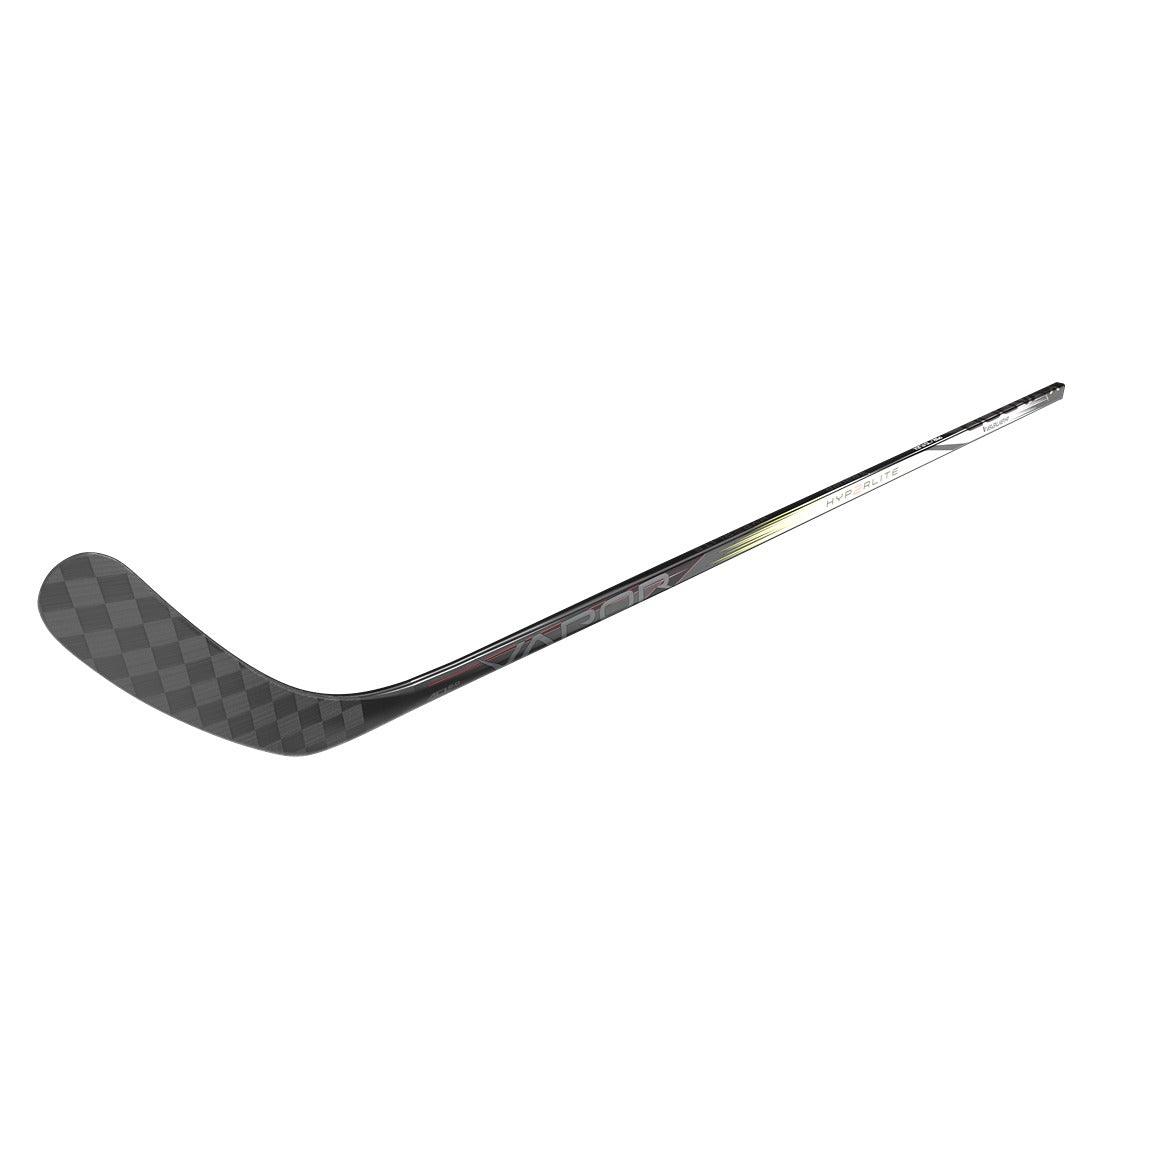 Bauer Vapor Hyperlite2 Hockey Stick - Youth